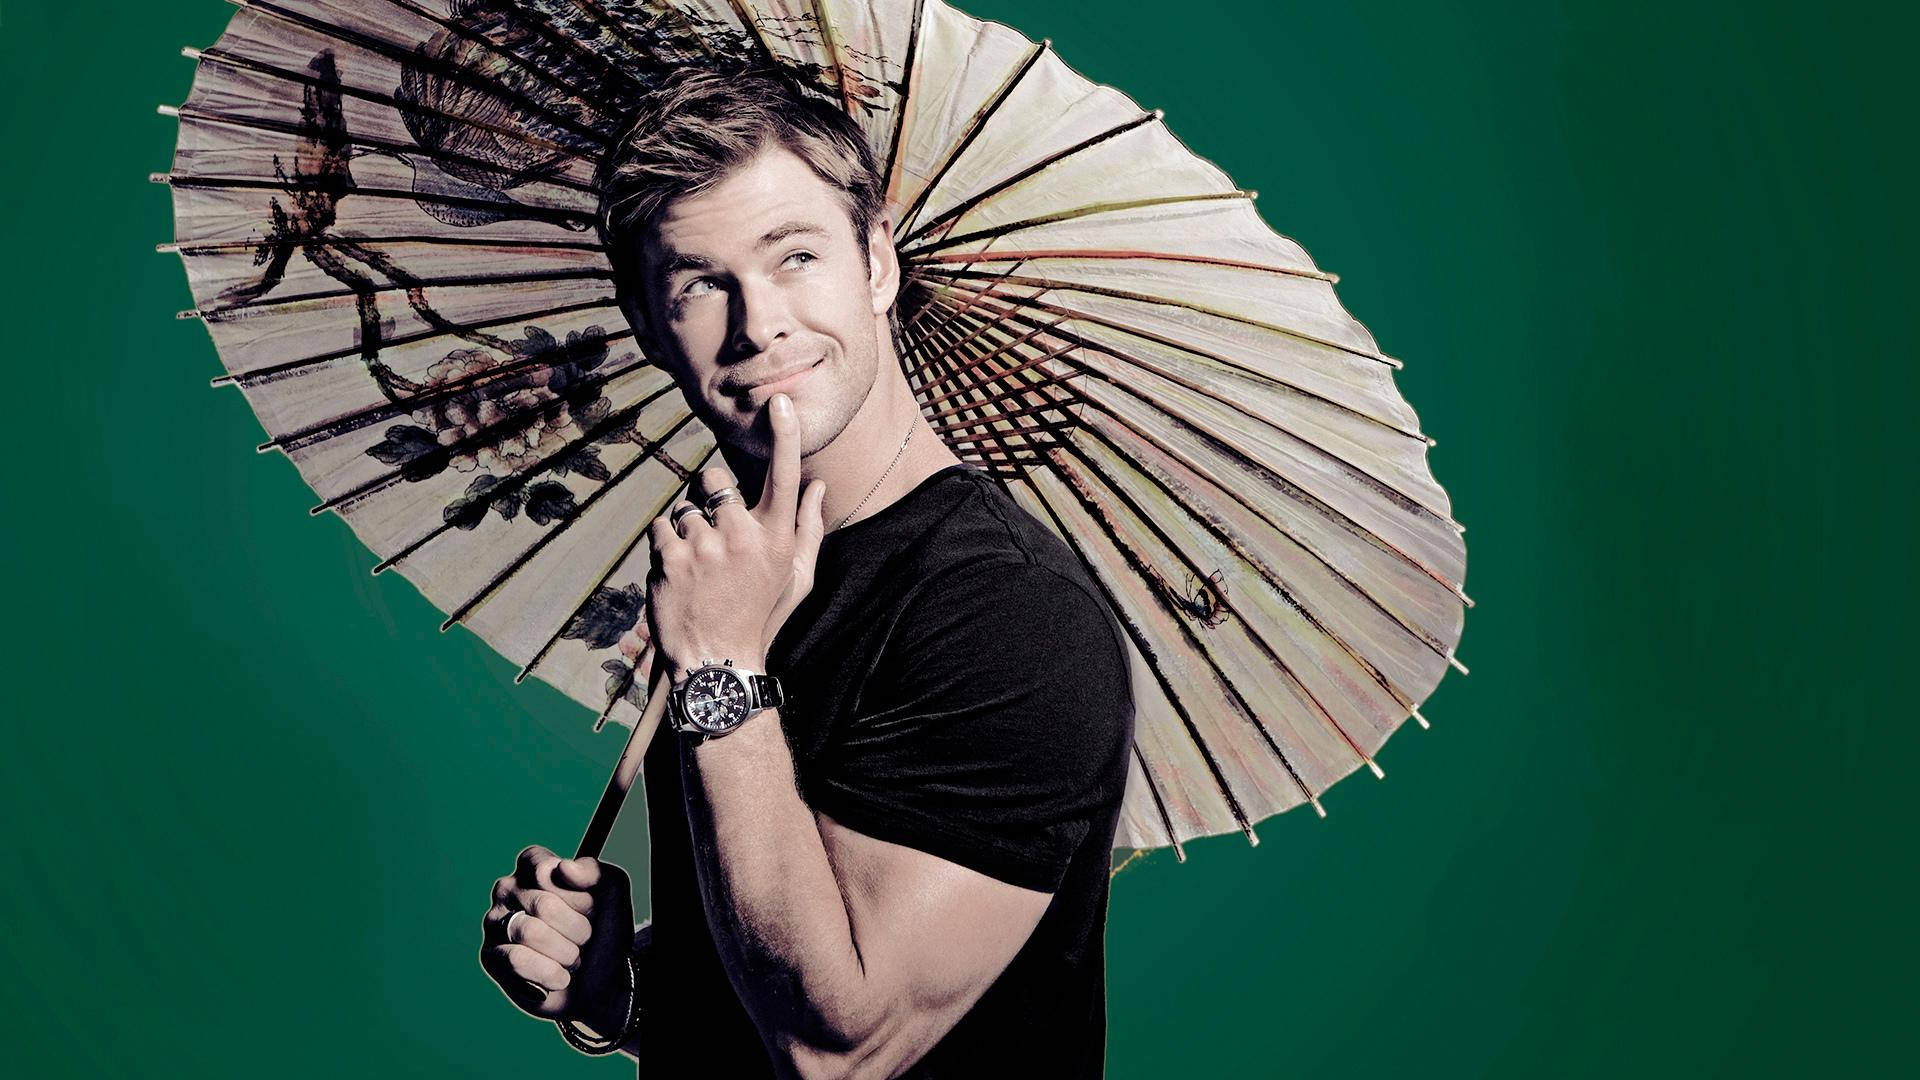 Image Chris Hemsworth With An Umbrella